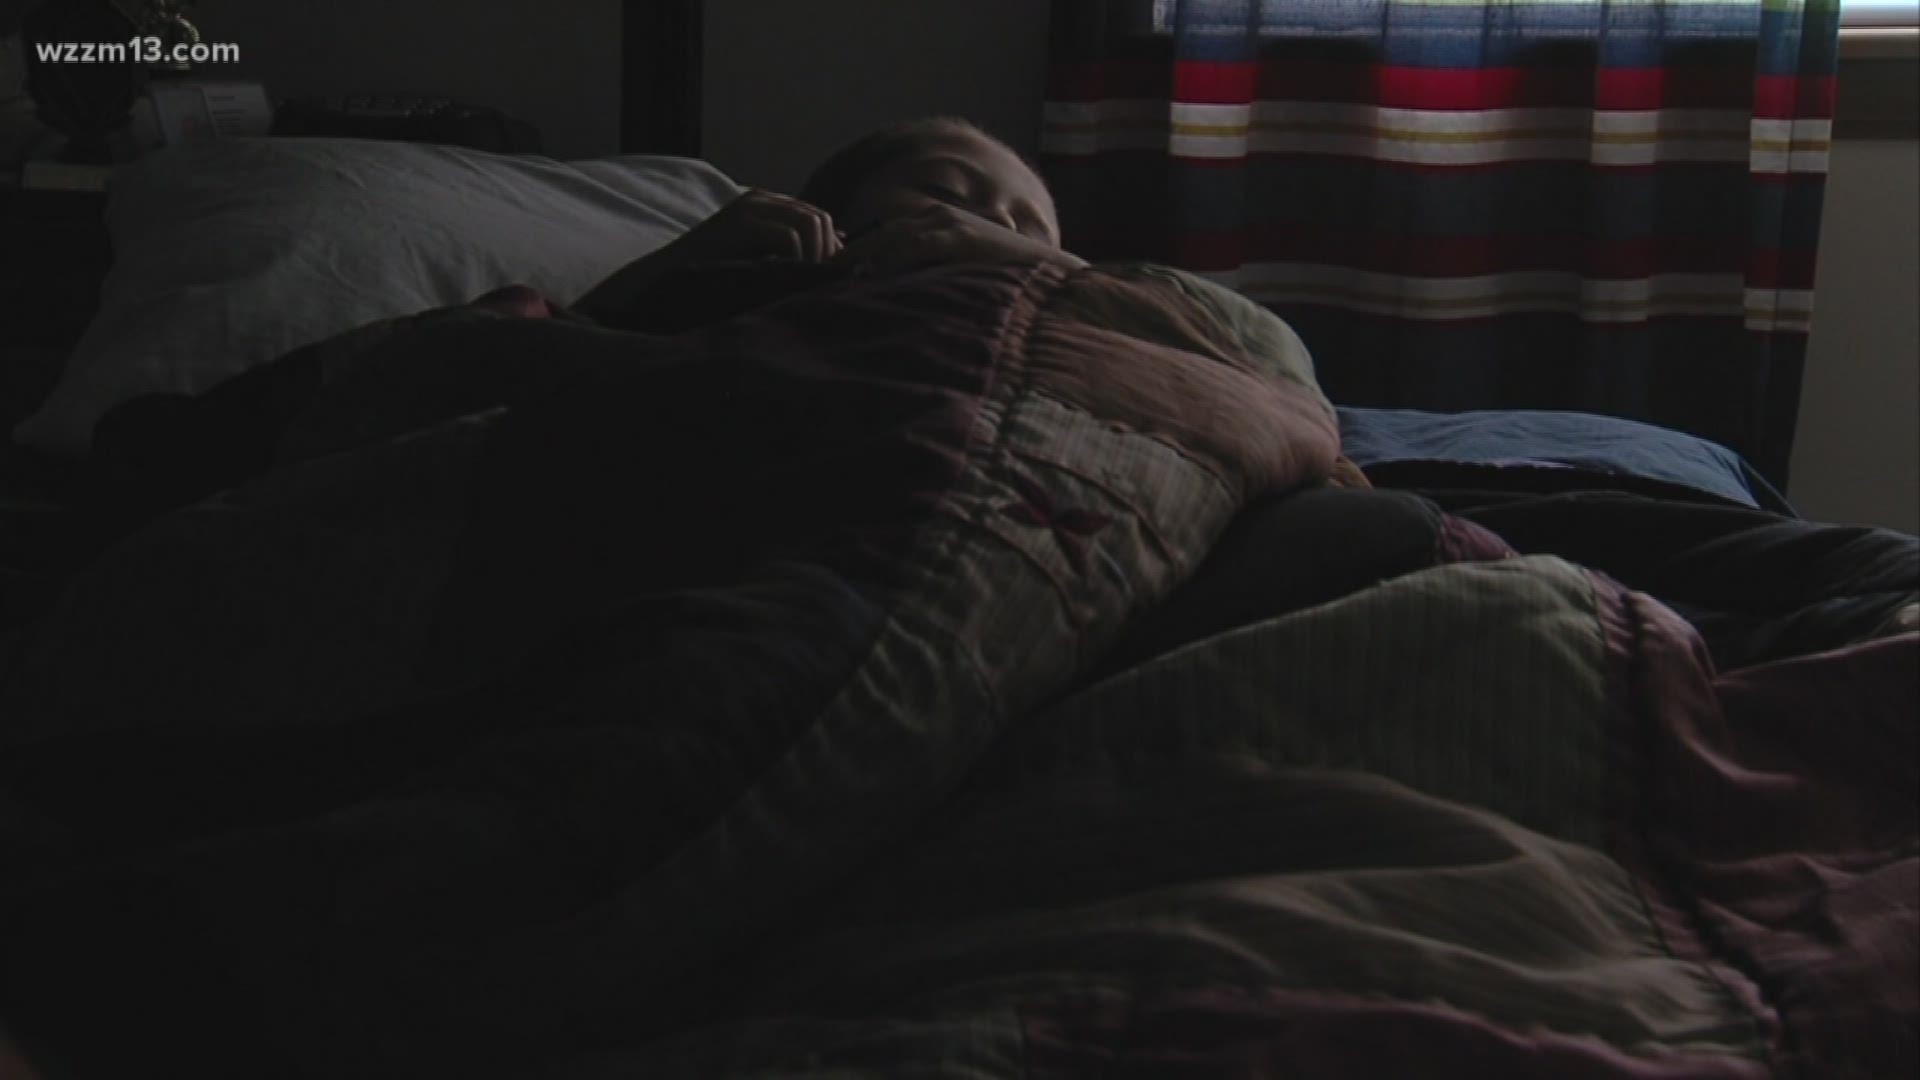 Lack of sleep puts teens at risk